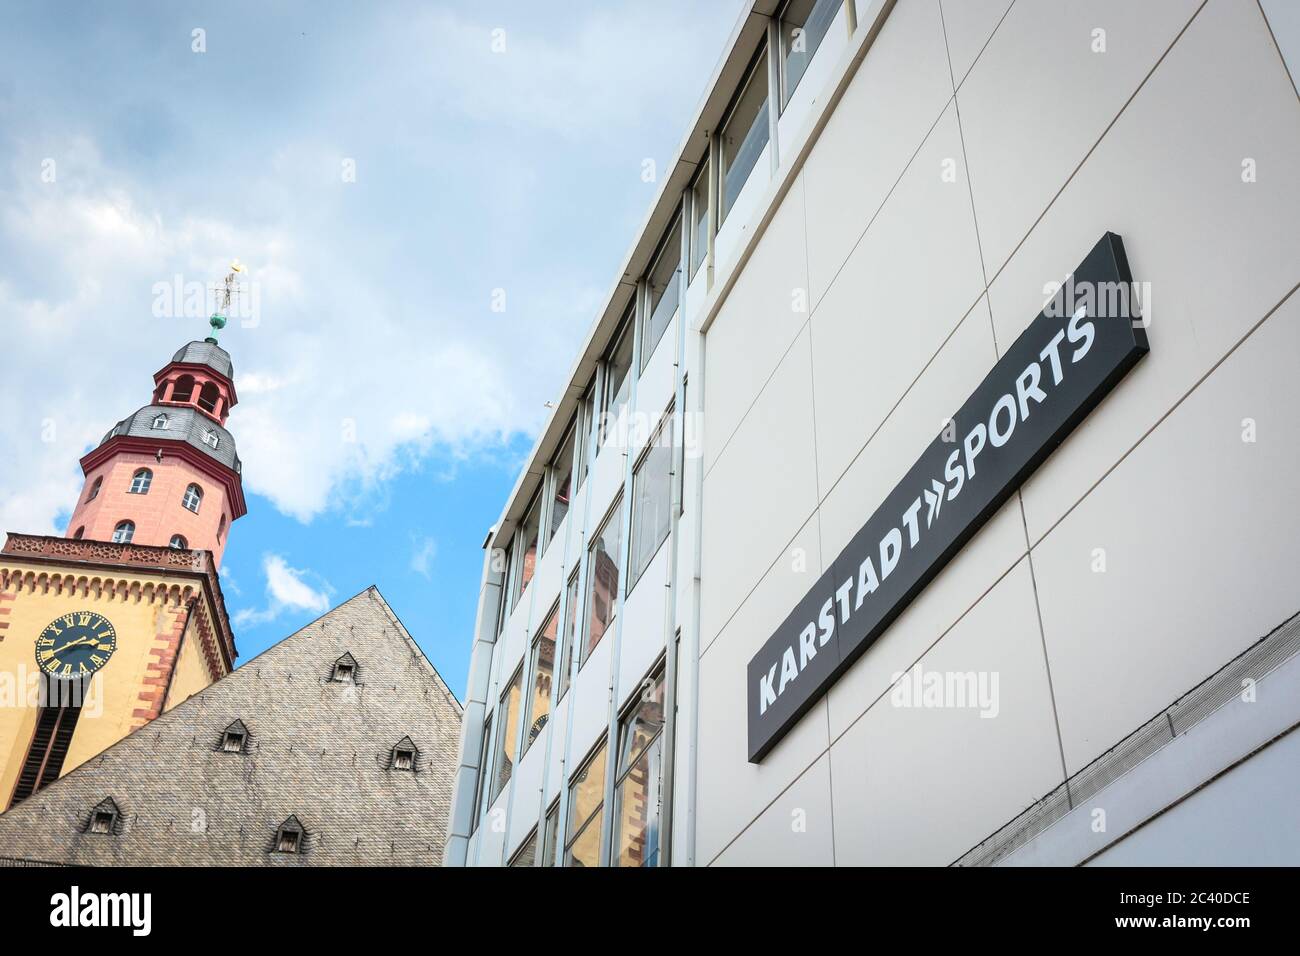 Karstadt Sports department store on Hauptwache square, Frankfurt, Germany. The retailer announced closing dozens of stores during coronavirus crisis. Stock Photo